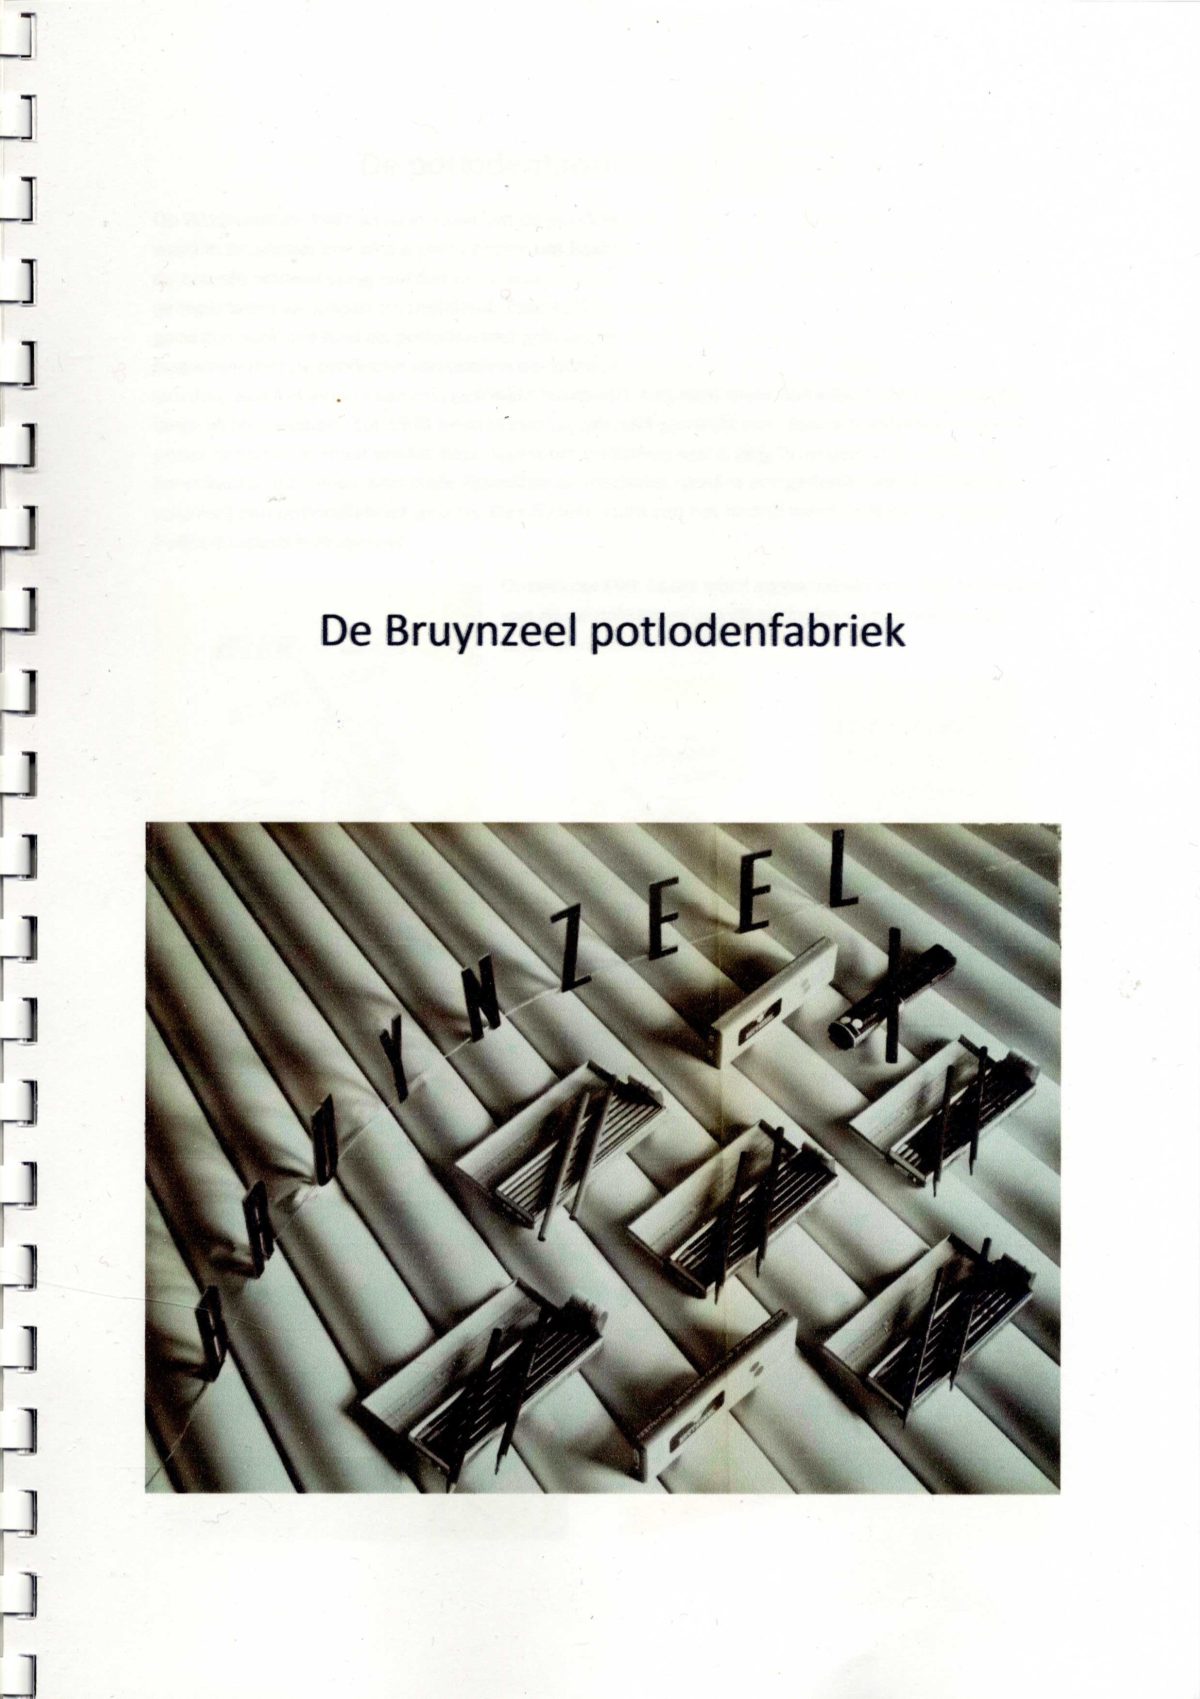 De Bruynzeel potlodenfabriek